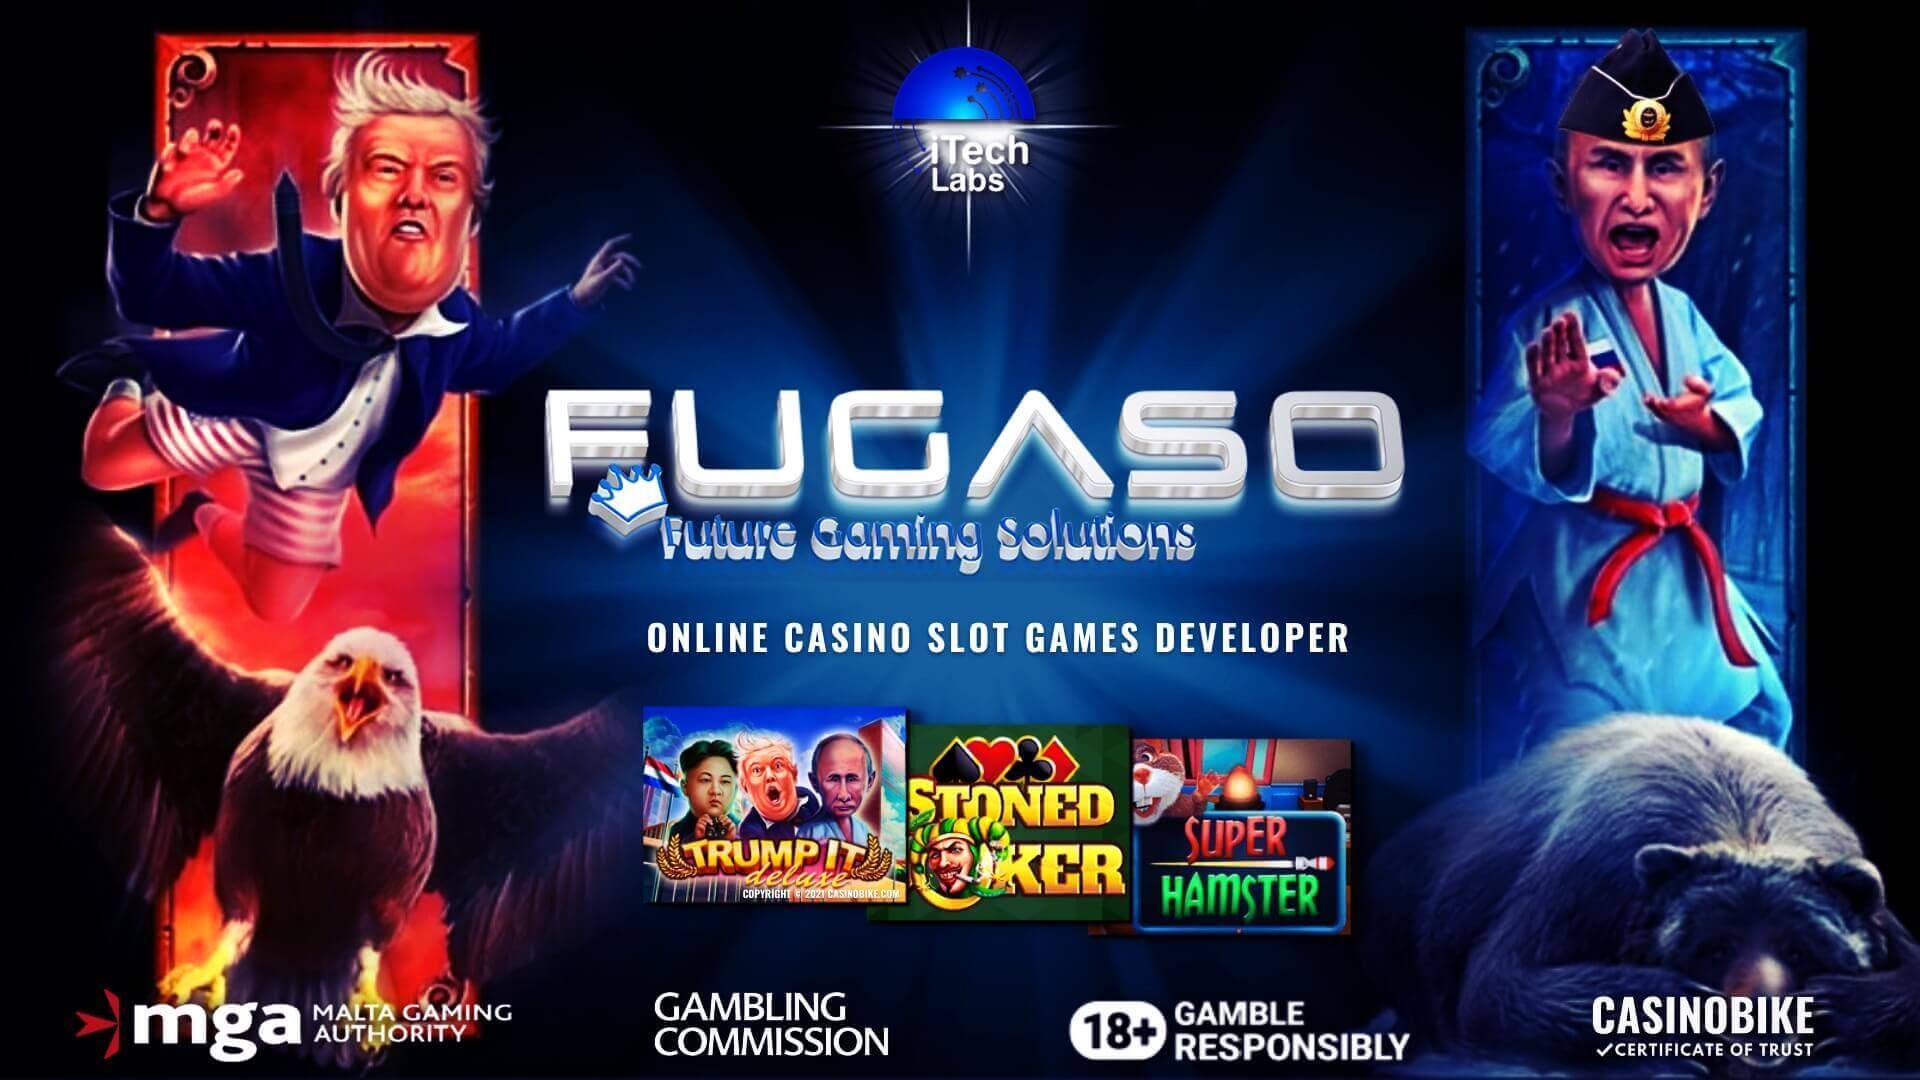 Future Gaming Solutions (FUGASO) Online Casino Slots Developer Review